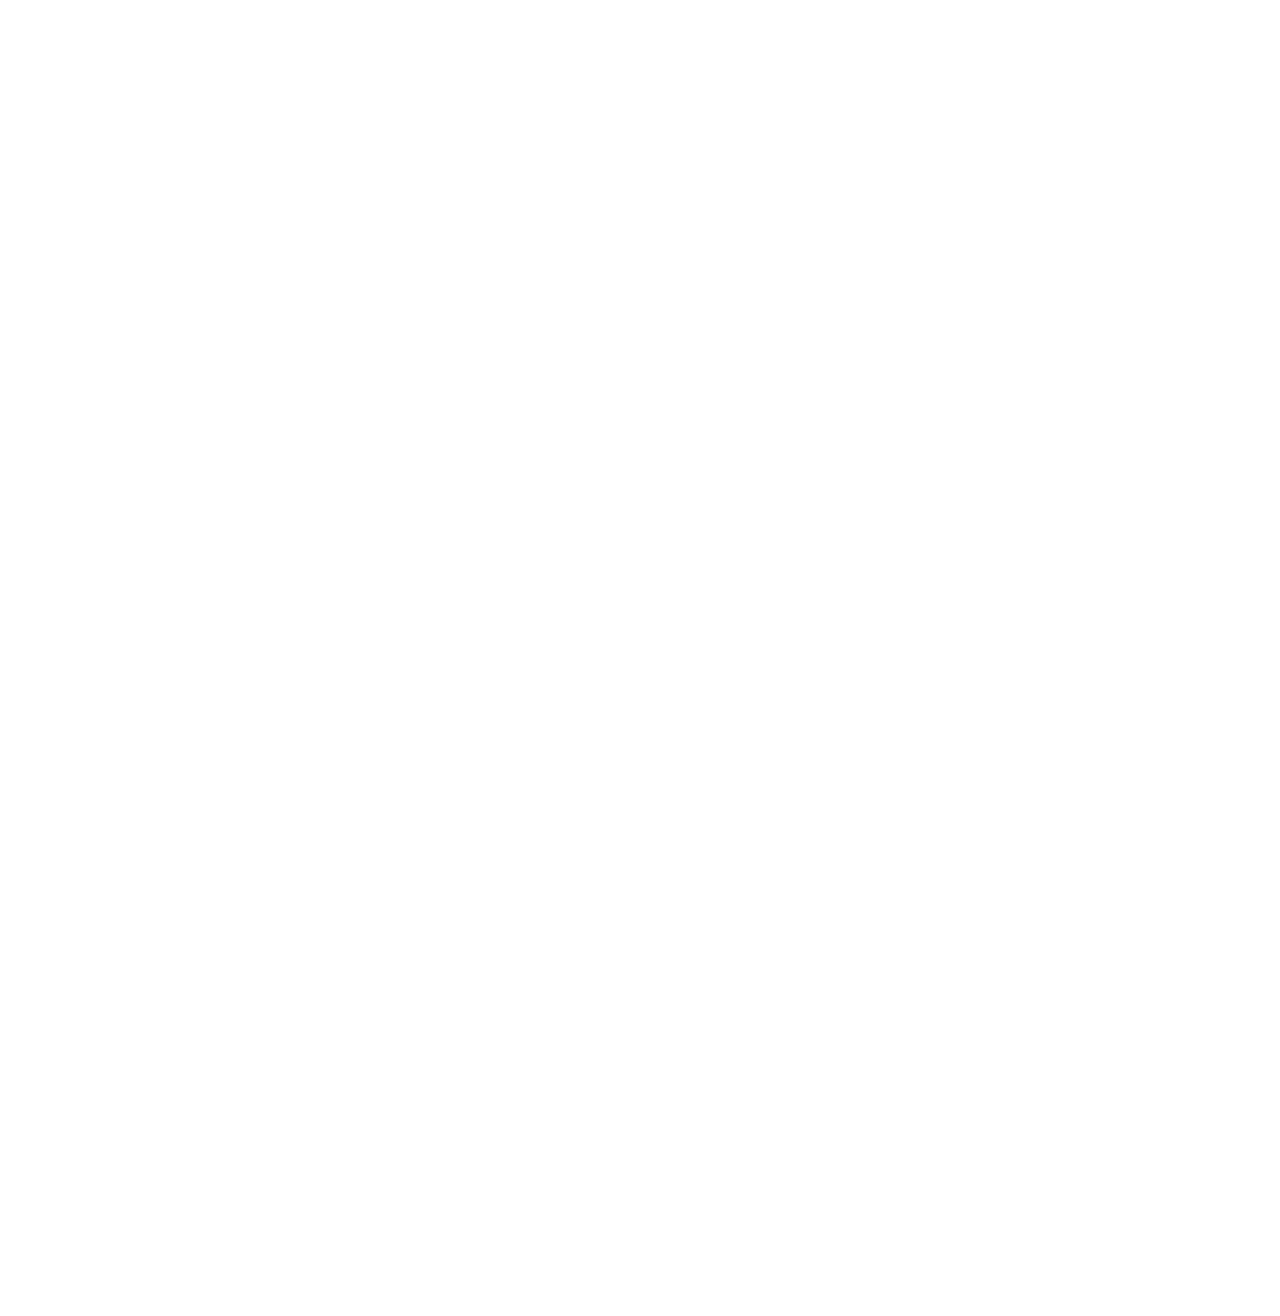 Honeycutt Mowing - Lawn & Brush Pro's web page